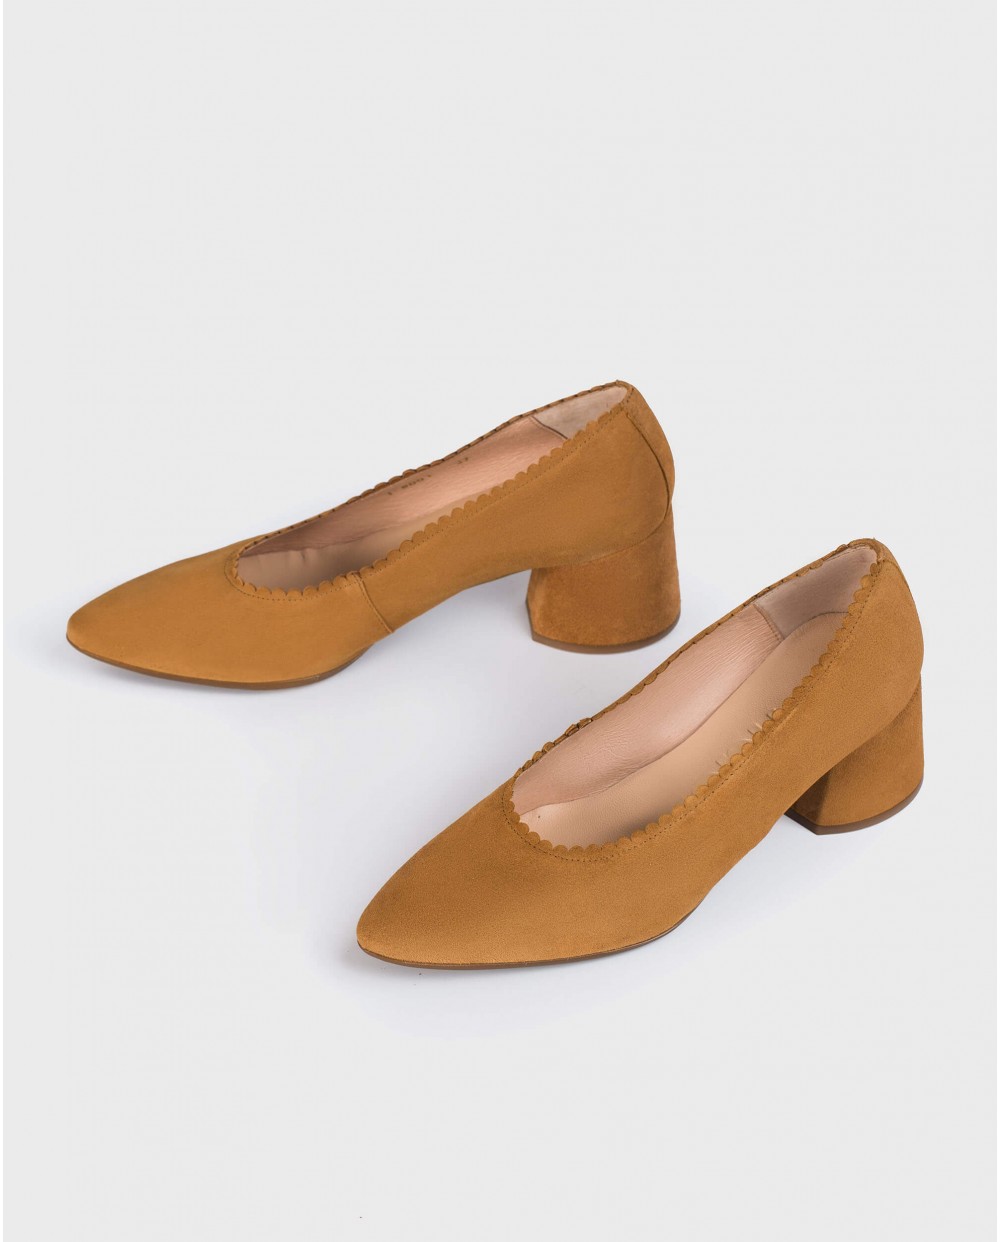 Midi-heeled court shoe